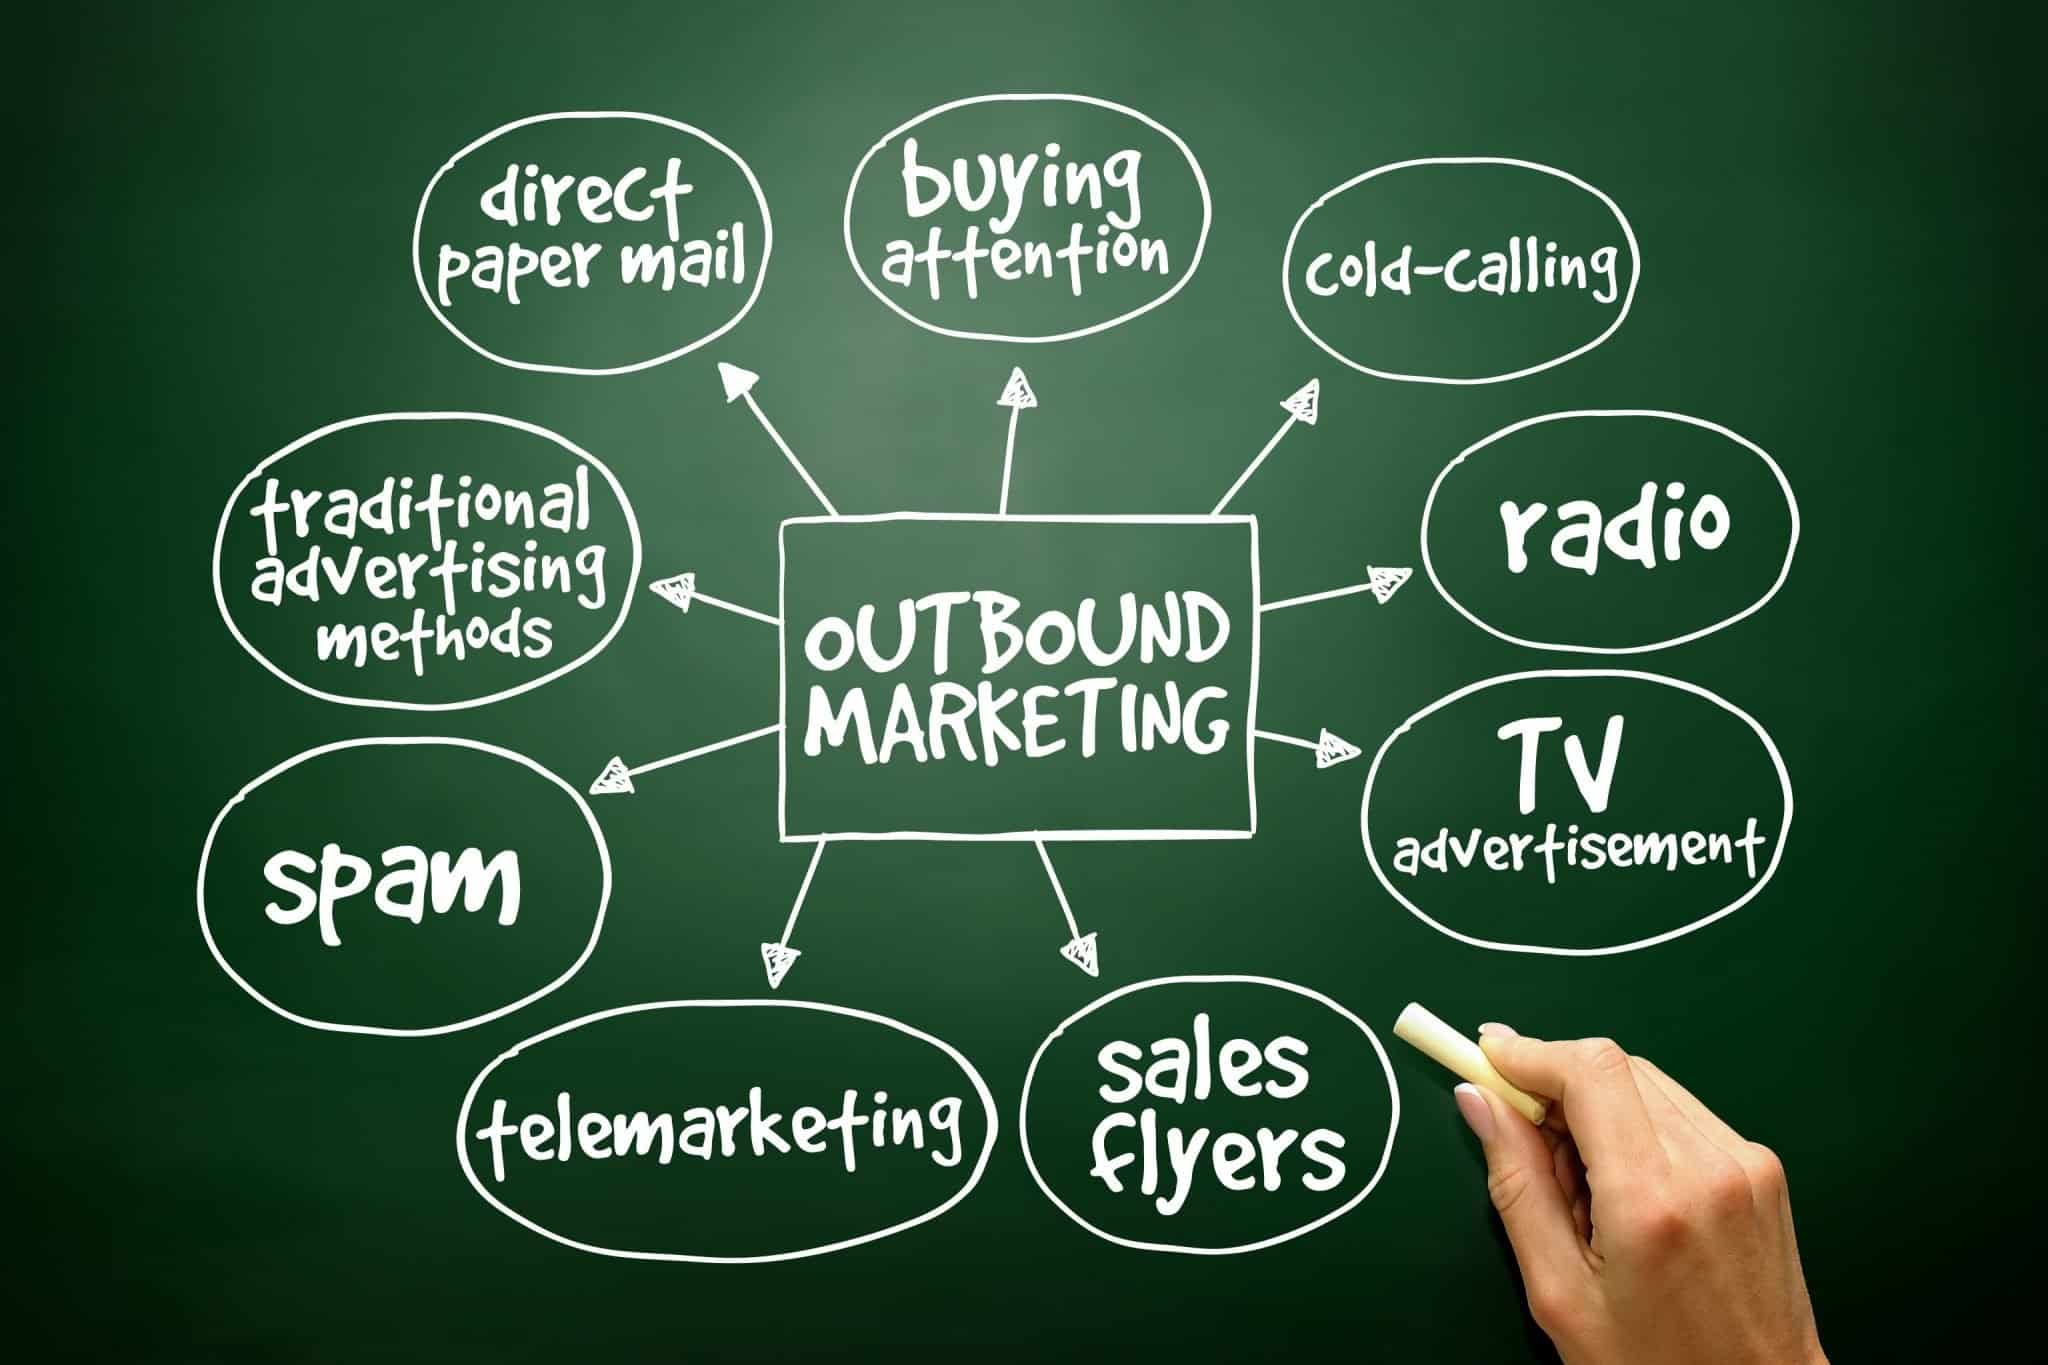 Outbound Marketing